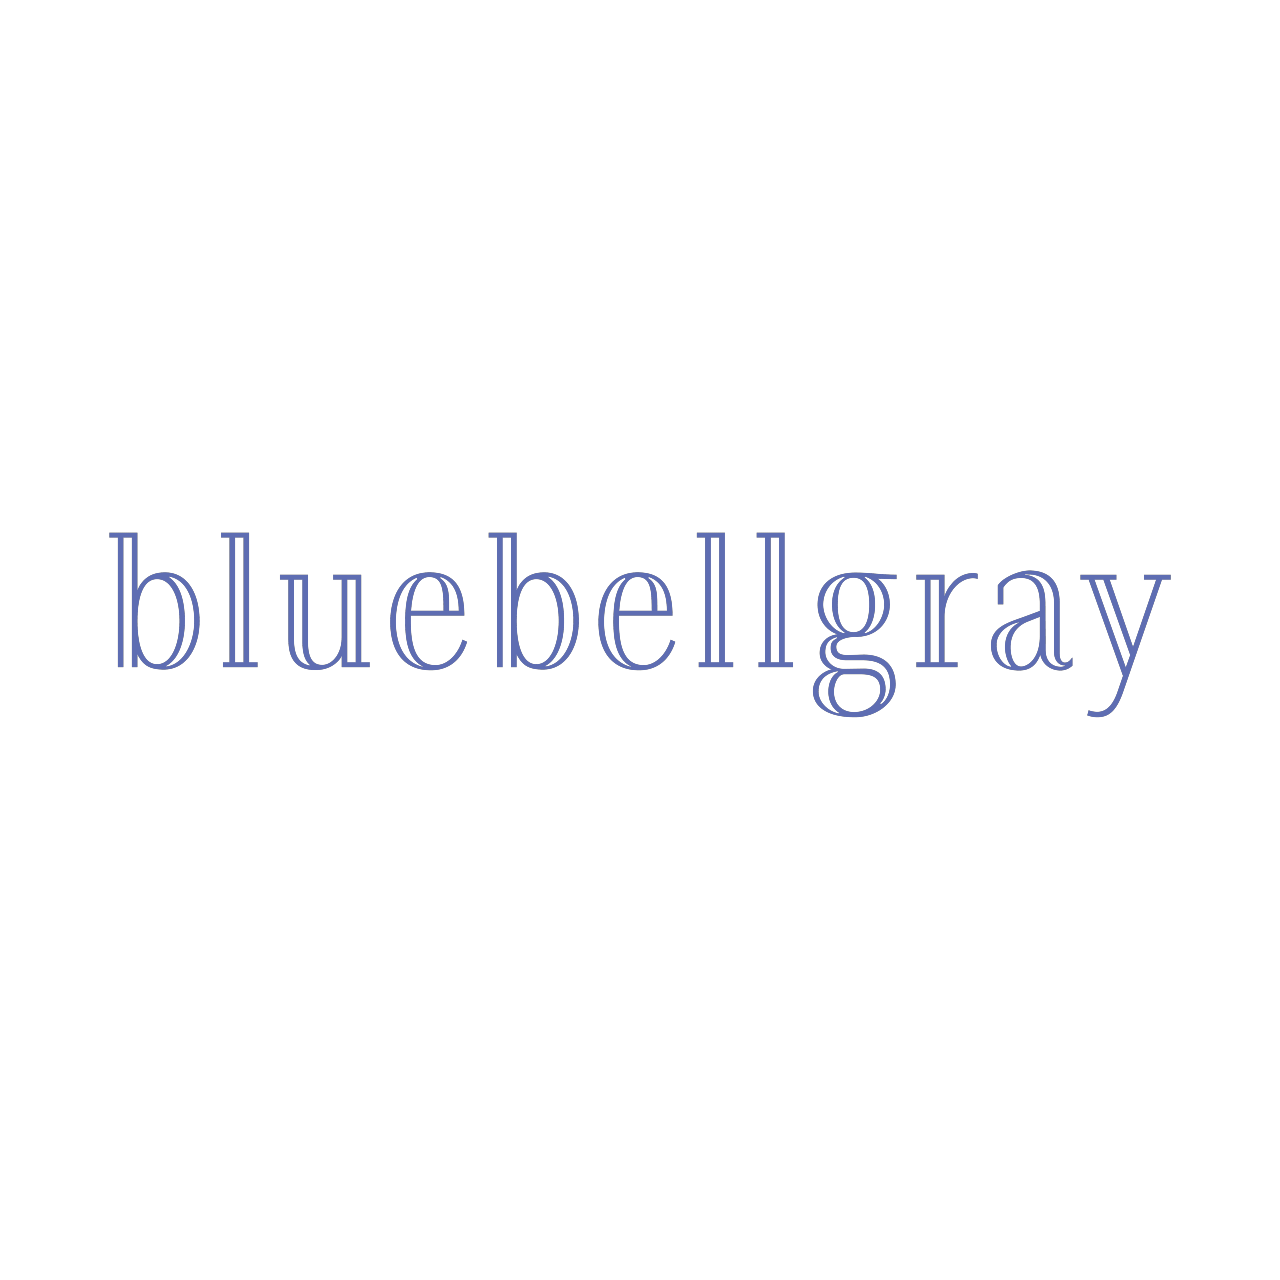 Bluebellgray